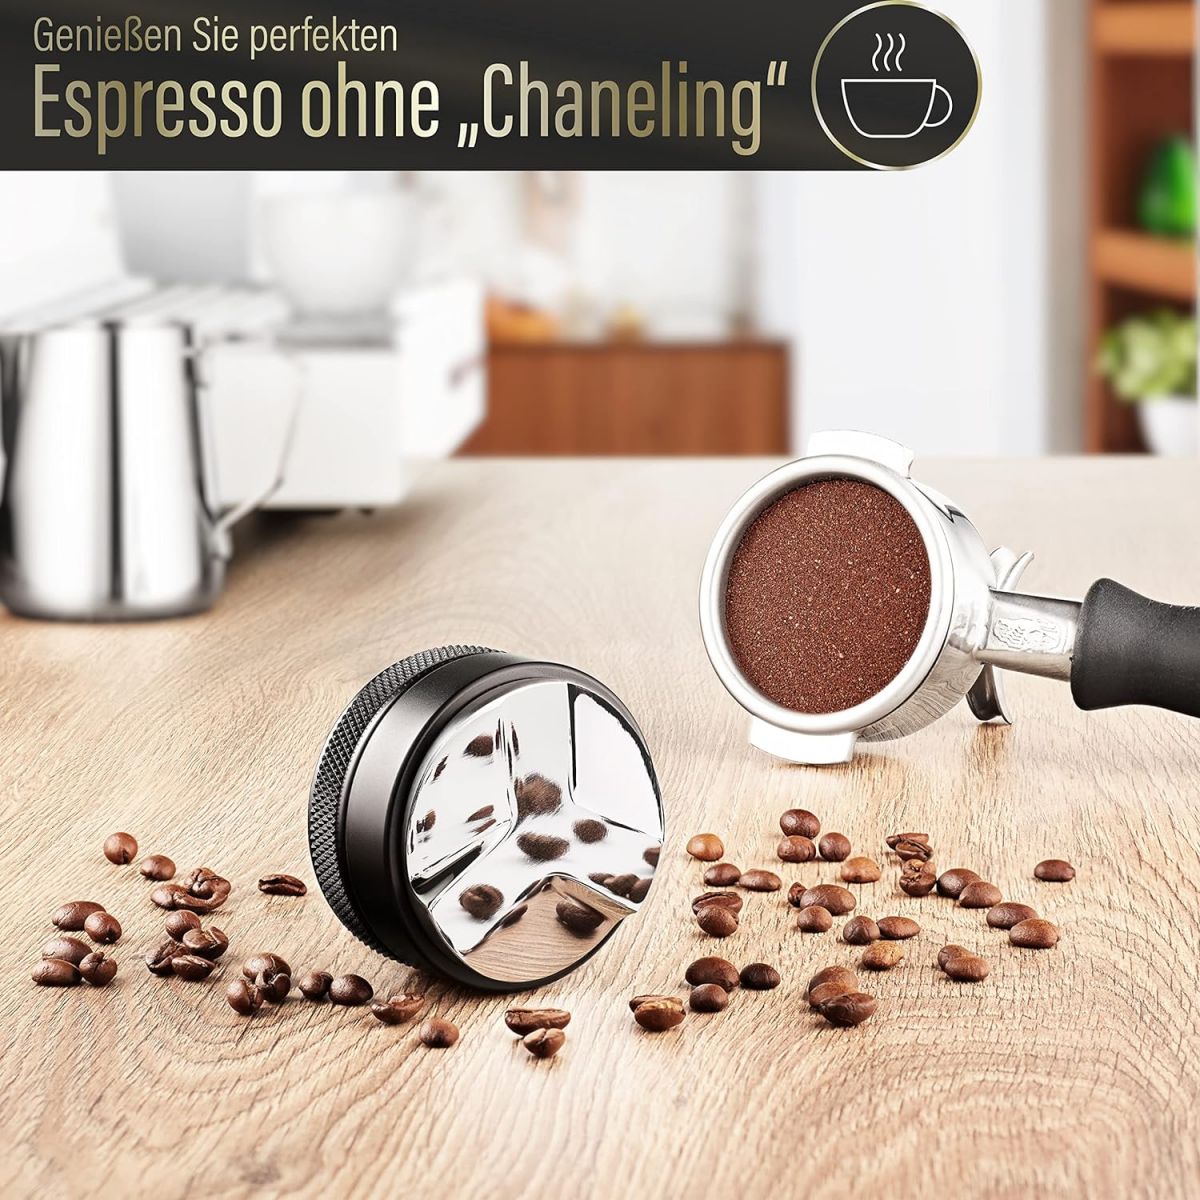 Espresso Distributor 53 mm for Perfect Results